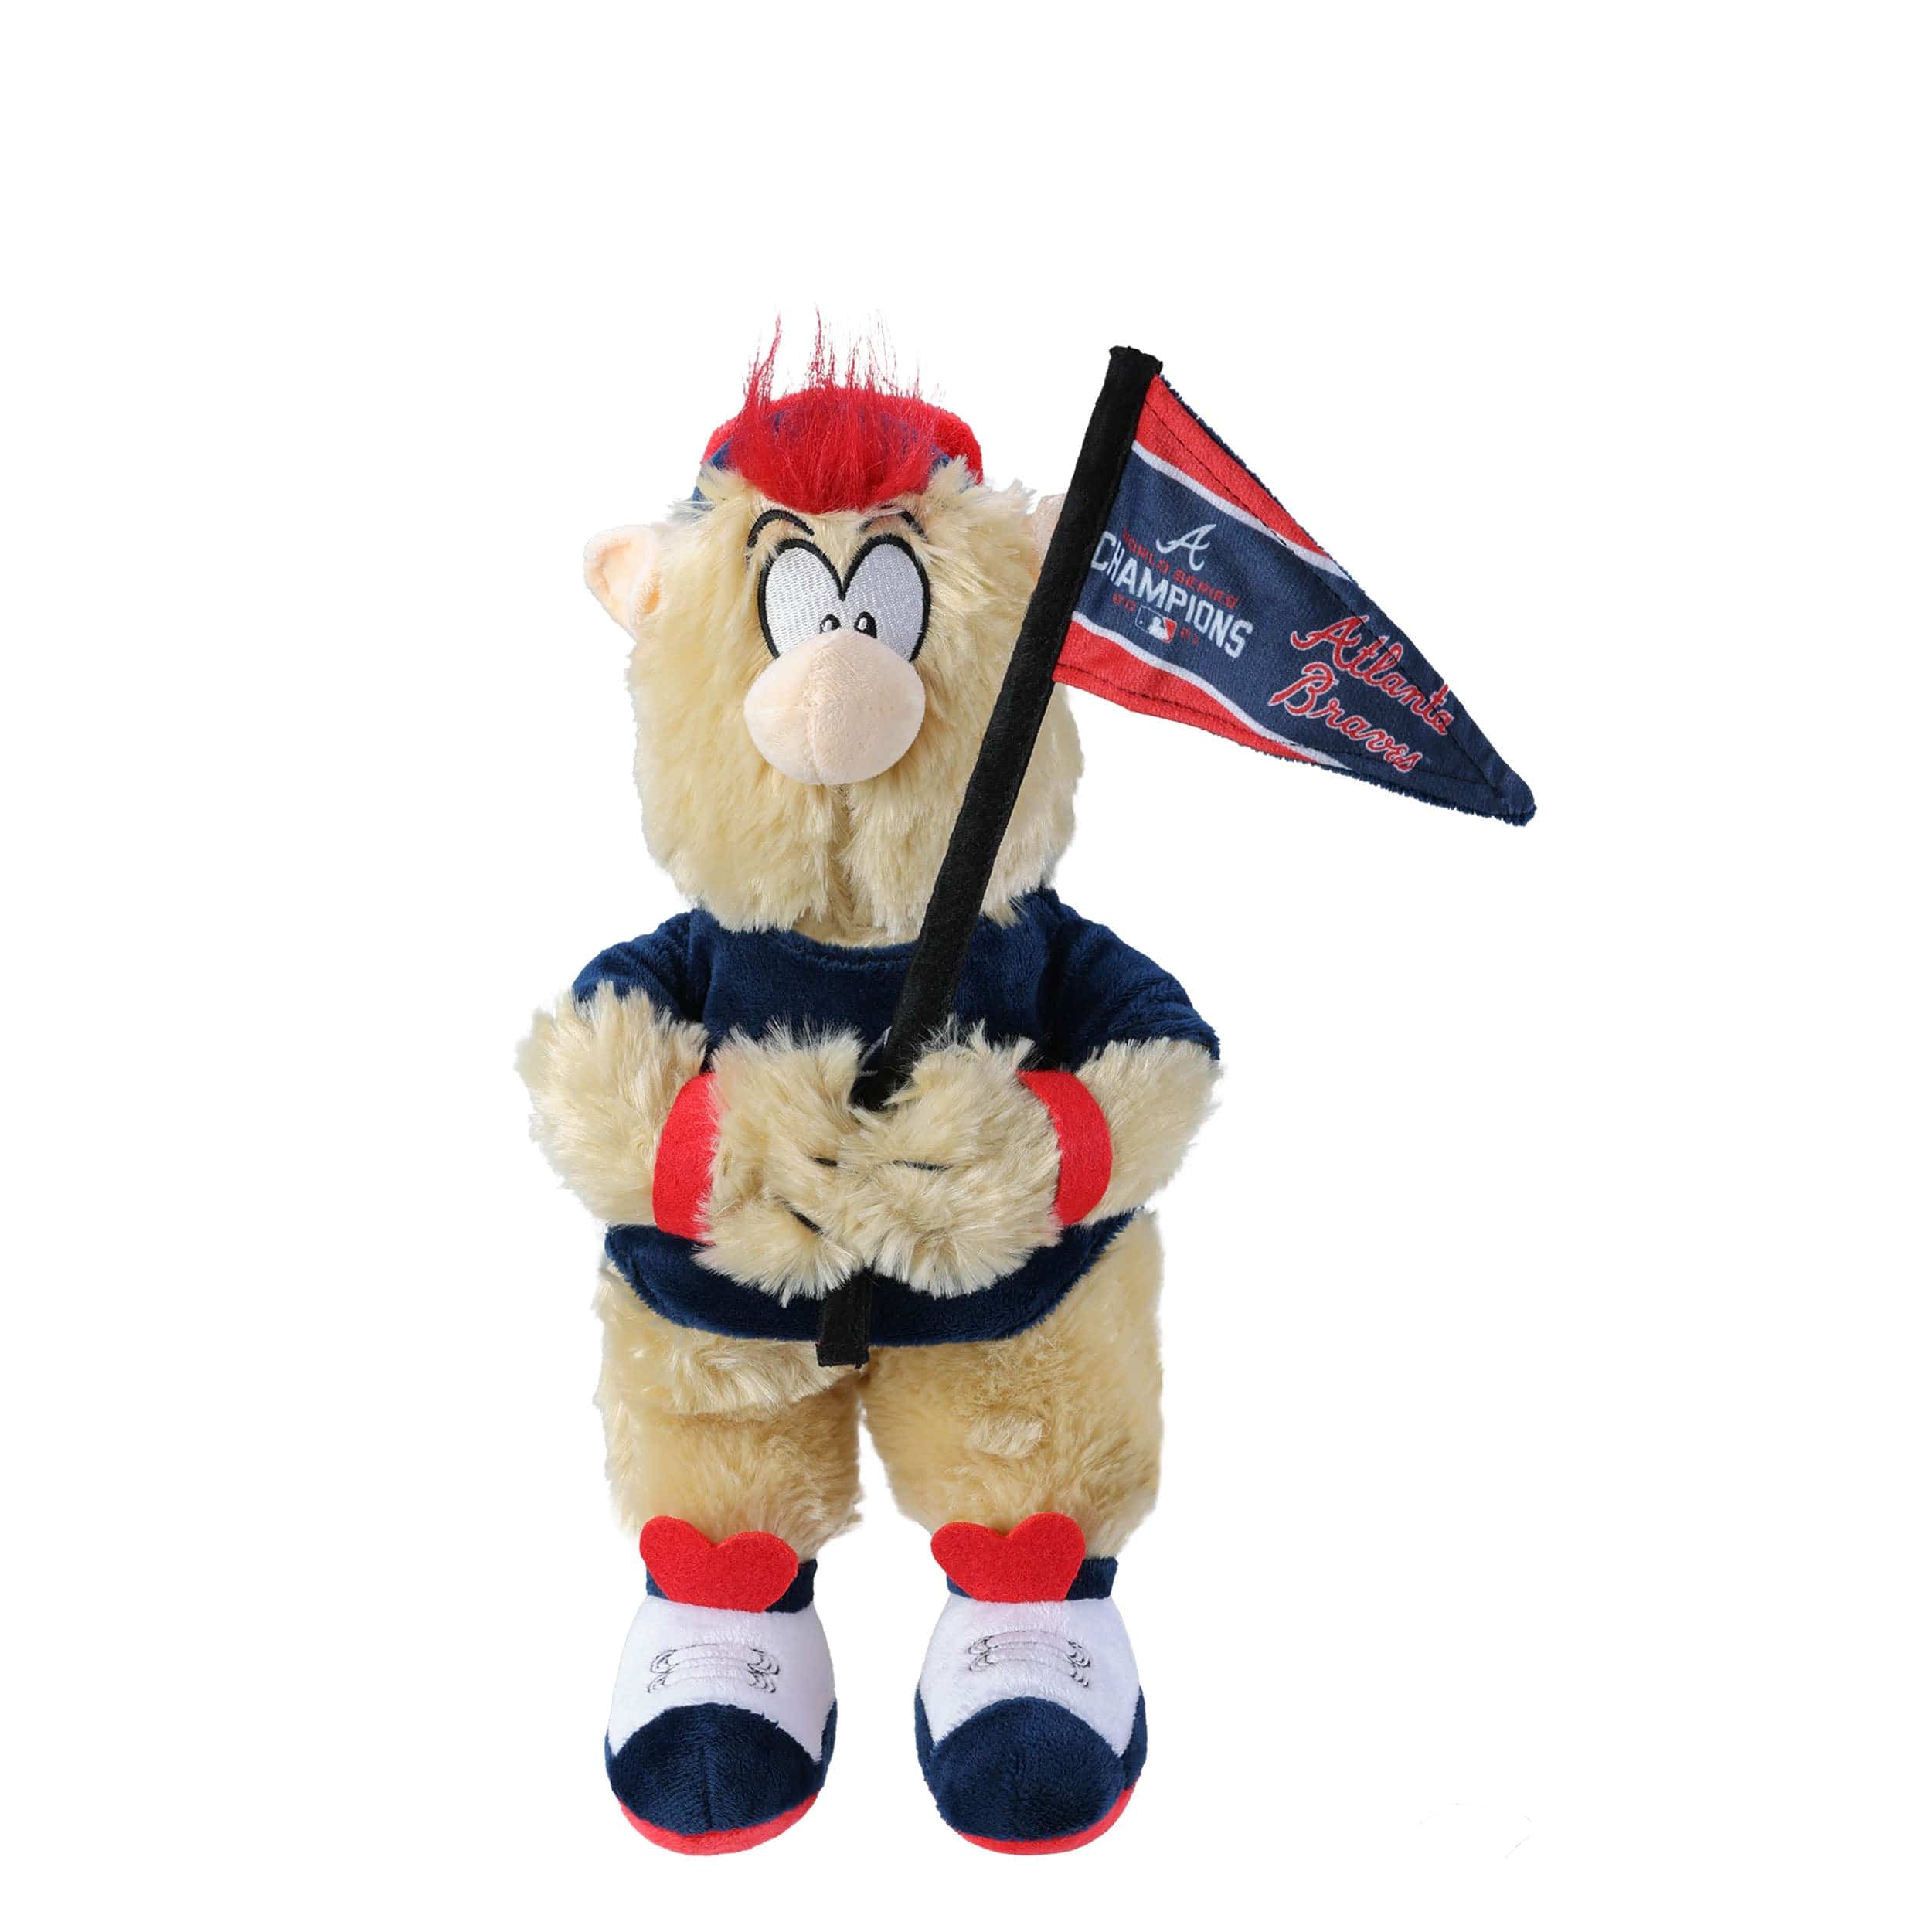 Georgia Bulldogs and Atlanta Braves mascot National Championship